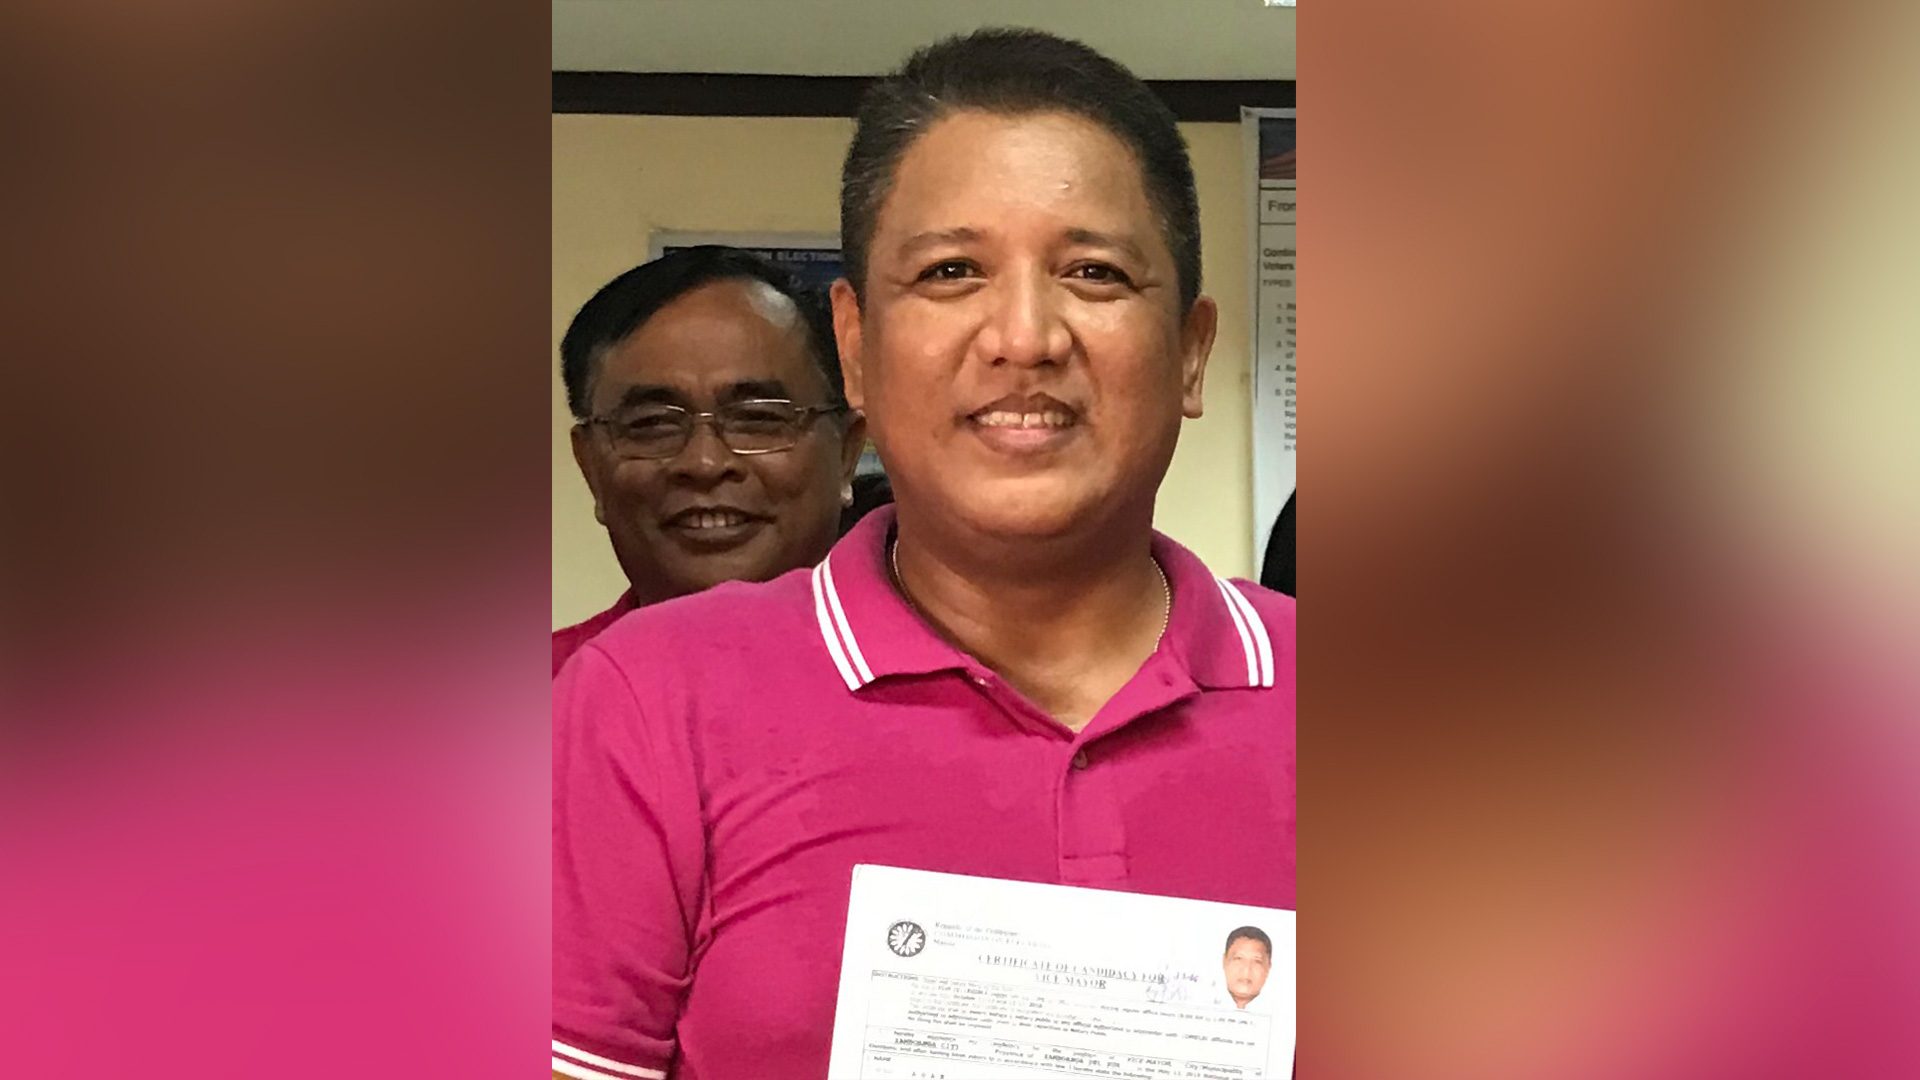 Zamboanga vice mayor launches bid, ticket on Sept. 23 to succeed Climaco